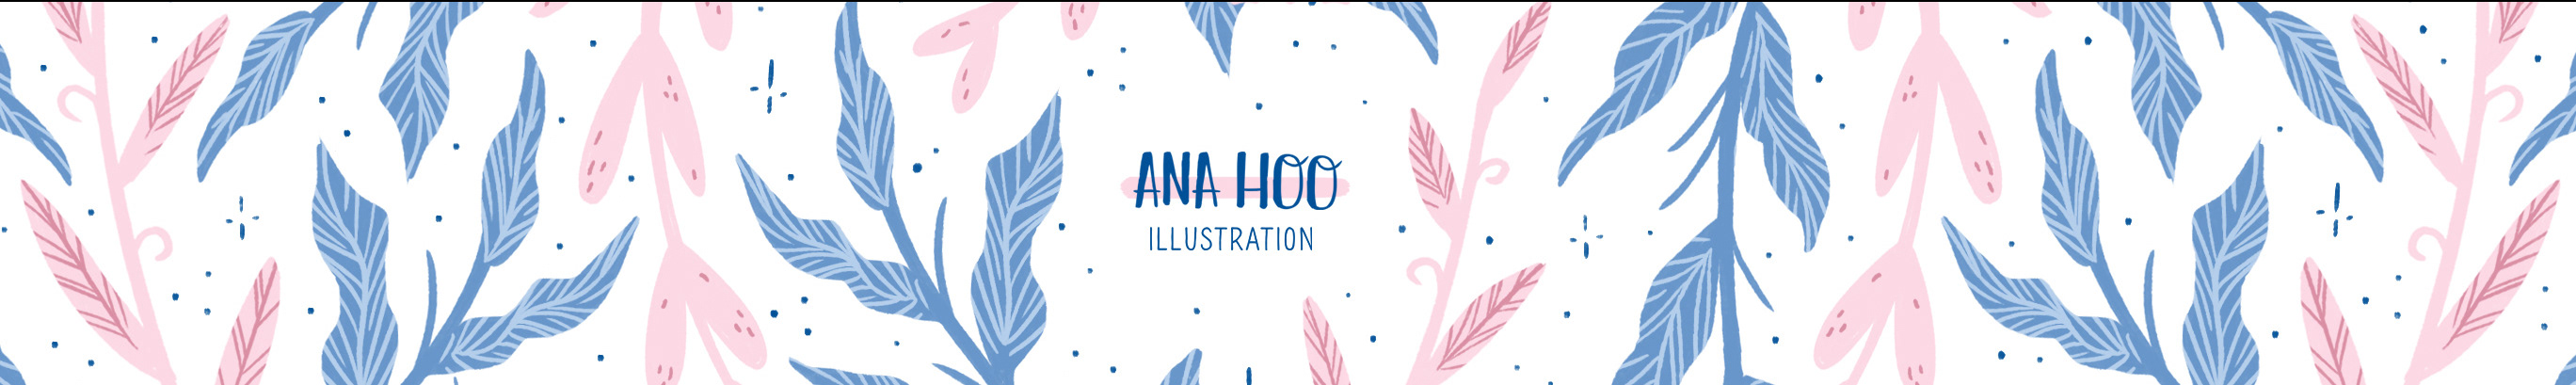 ANA HOO's profile banner